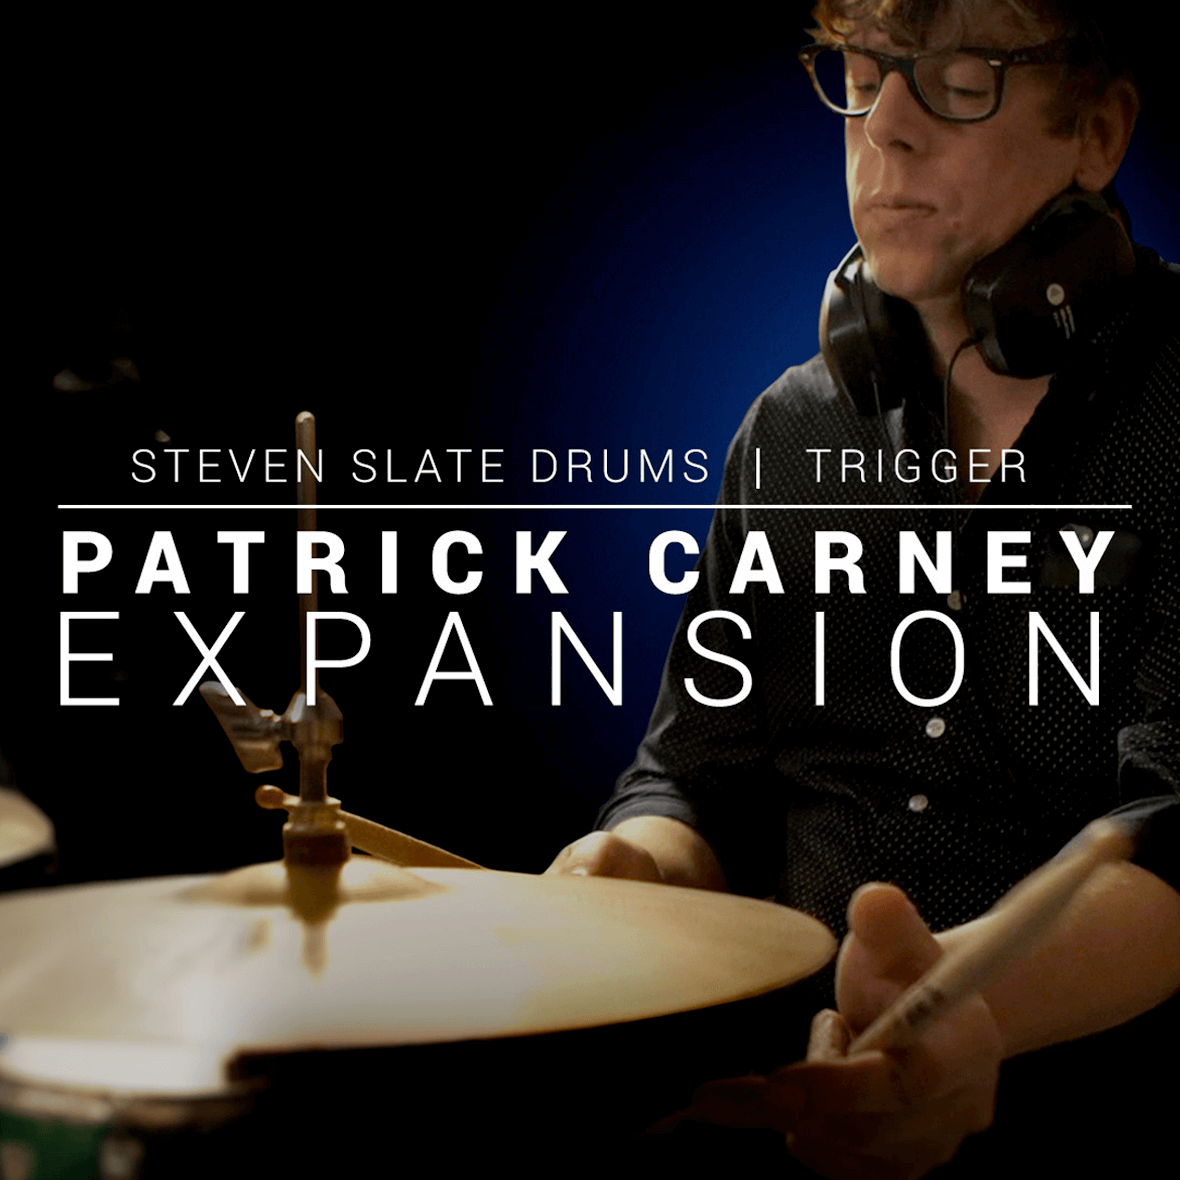 Steven Slate Drums Patrick Carney Expansion